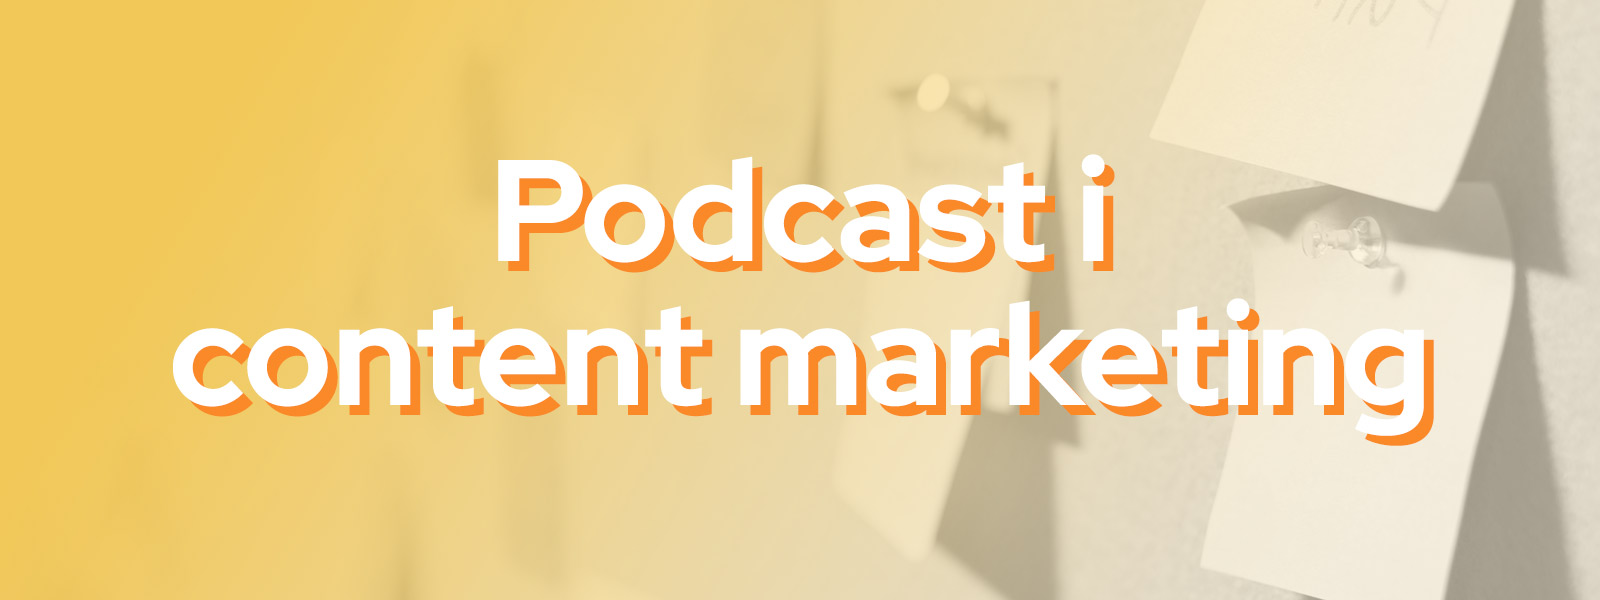 Podcast i content marketing